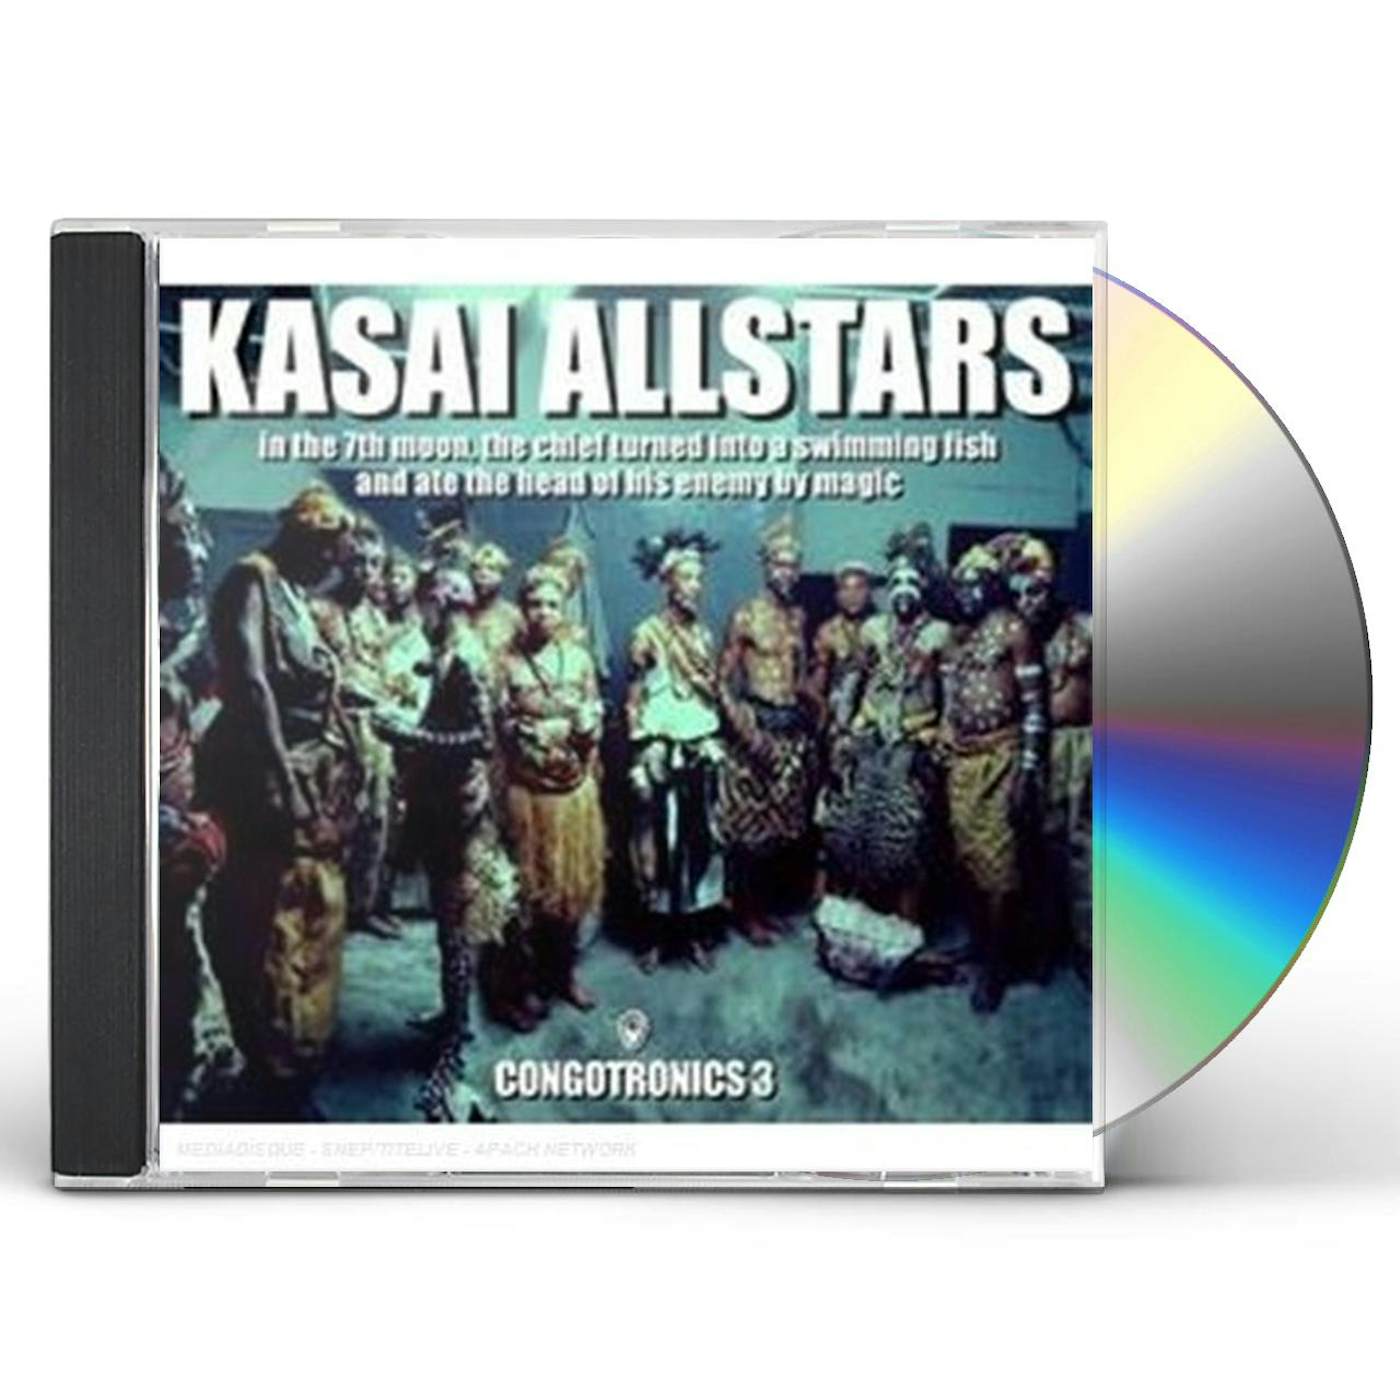 Kasai Allstars IN THE 7TH MOON CD